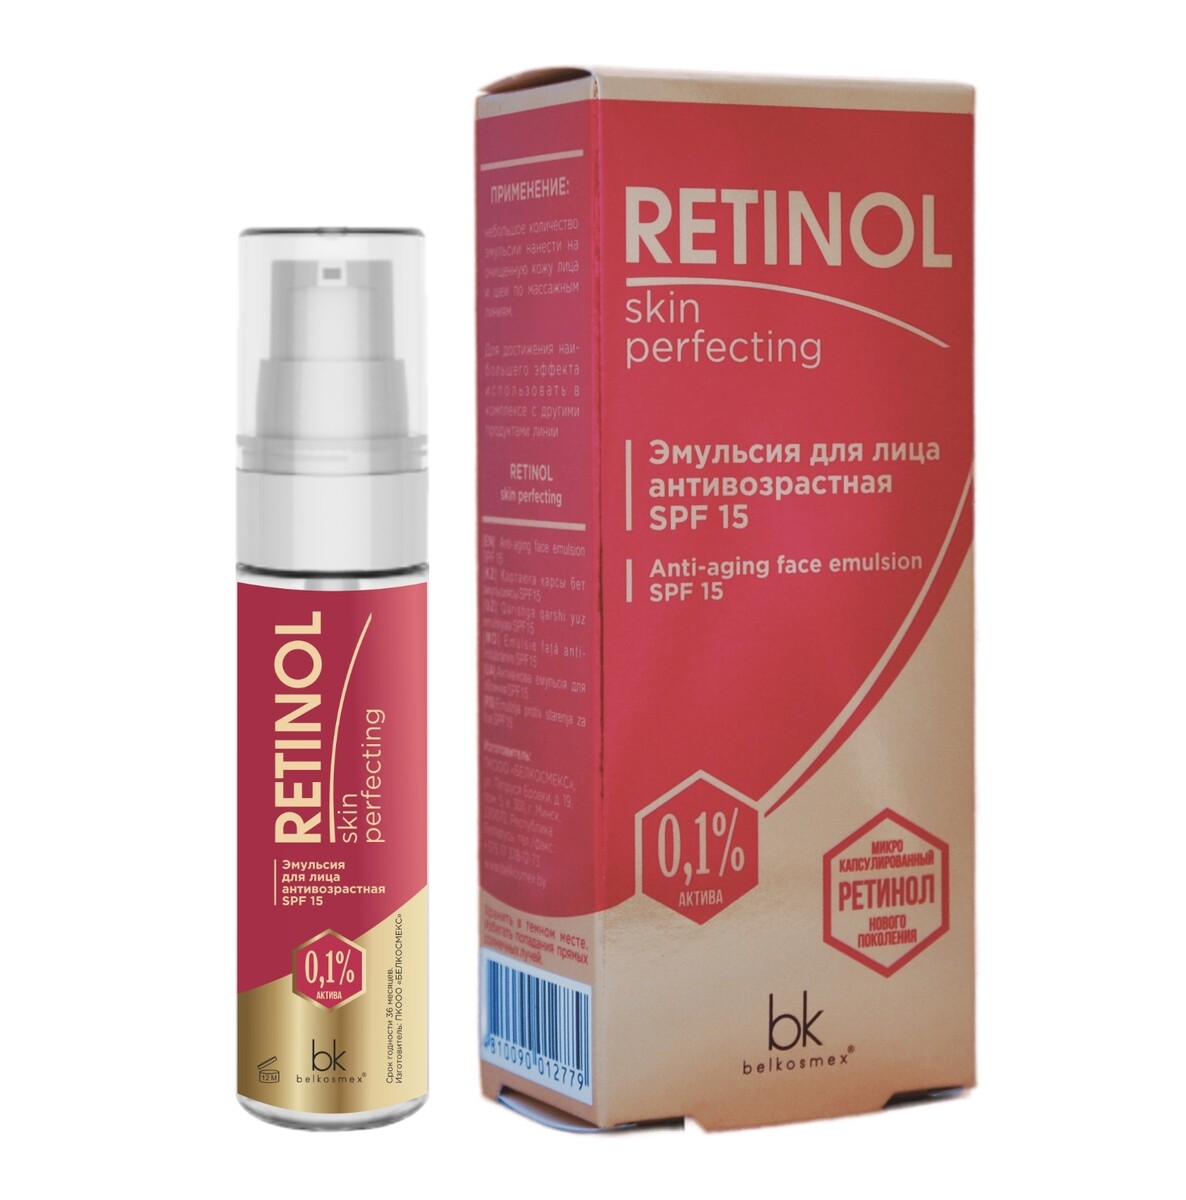 Retinol skin perfecting эмульсия для лица антивозрастная spf 15 30г retinol skin perfecting крем гель для умывания 150г